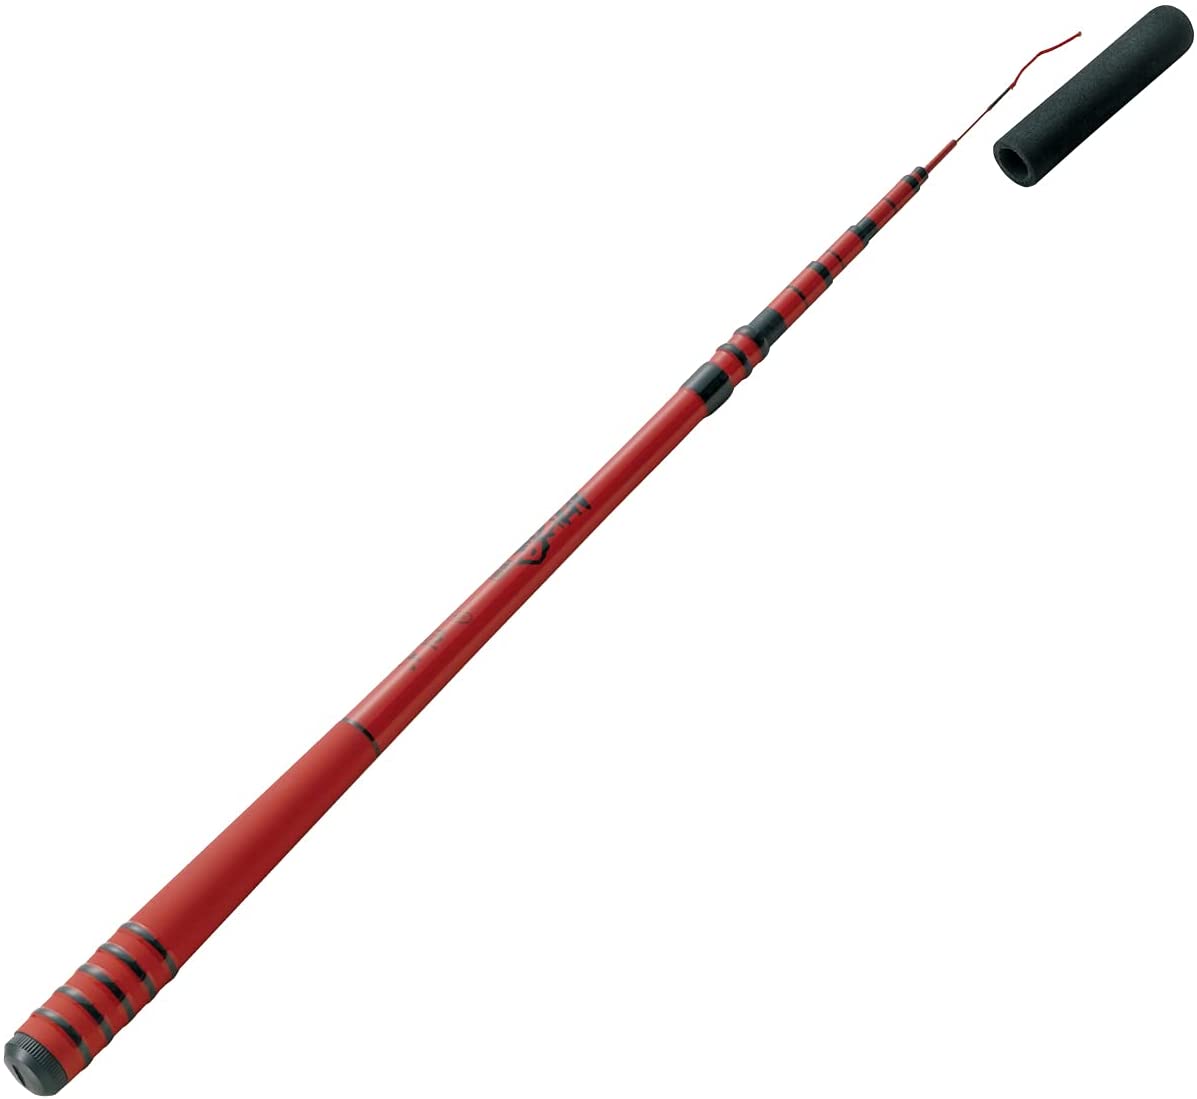 TIEMCO 456 Akatsuri Adjustable Microfishing Rod 144 - 185 cm (4'9 - 6'1)  - Red